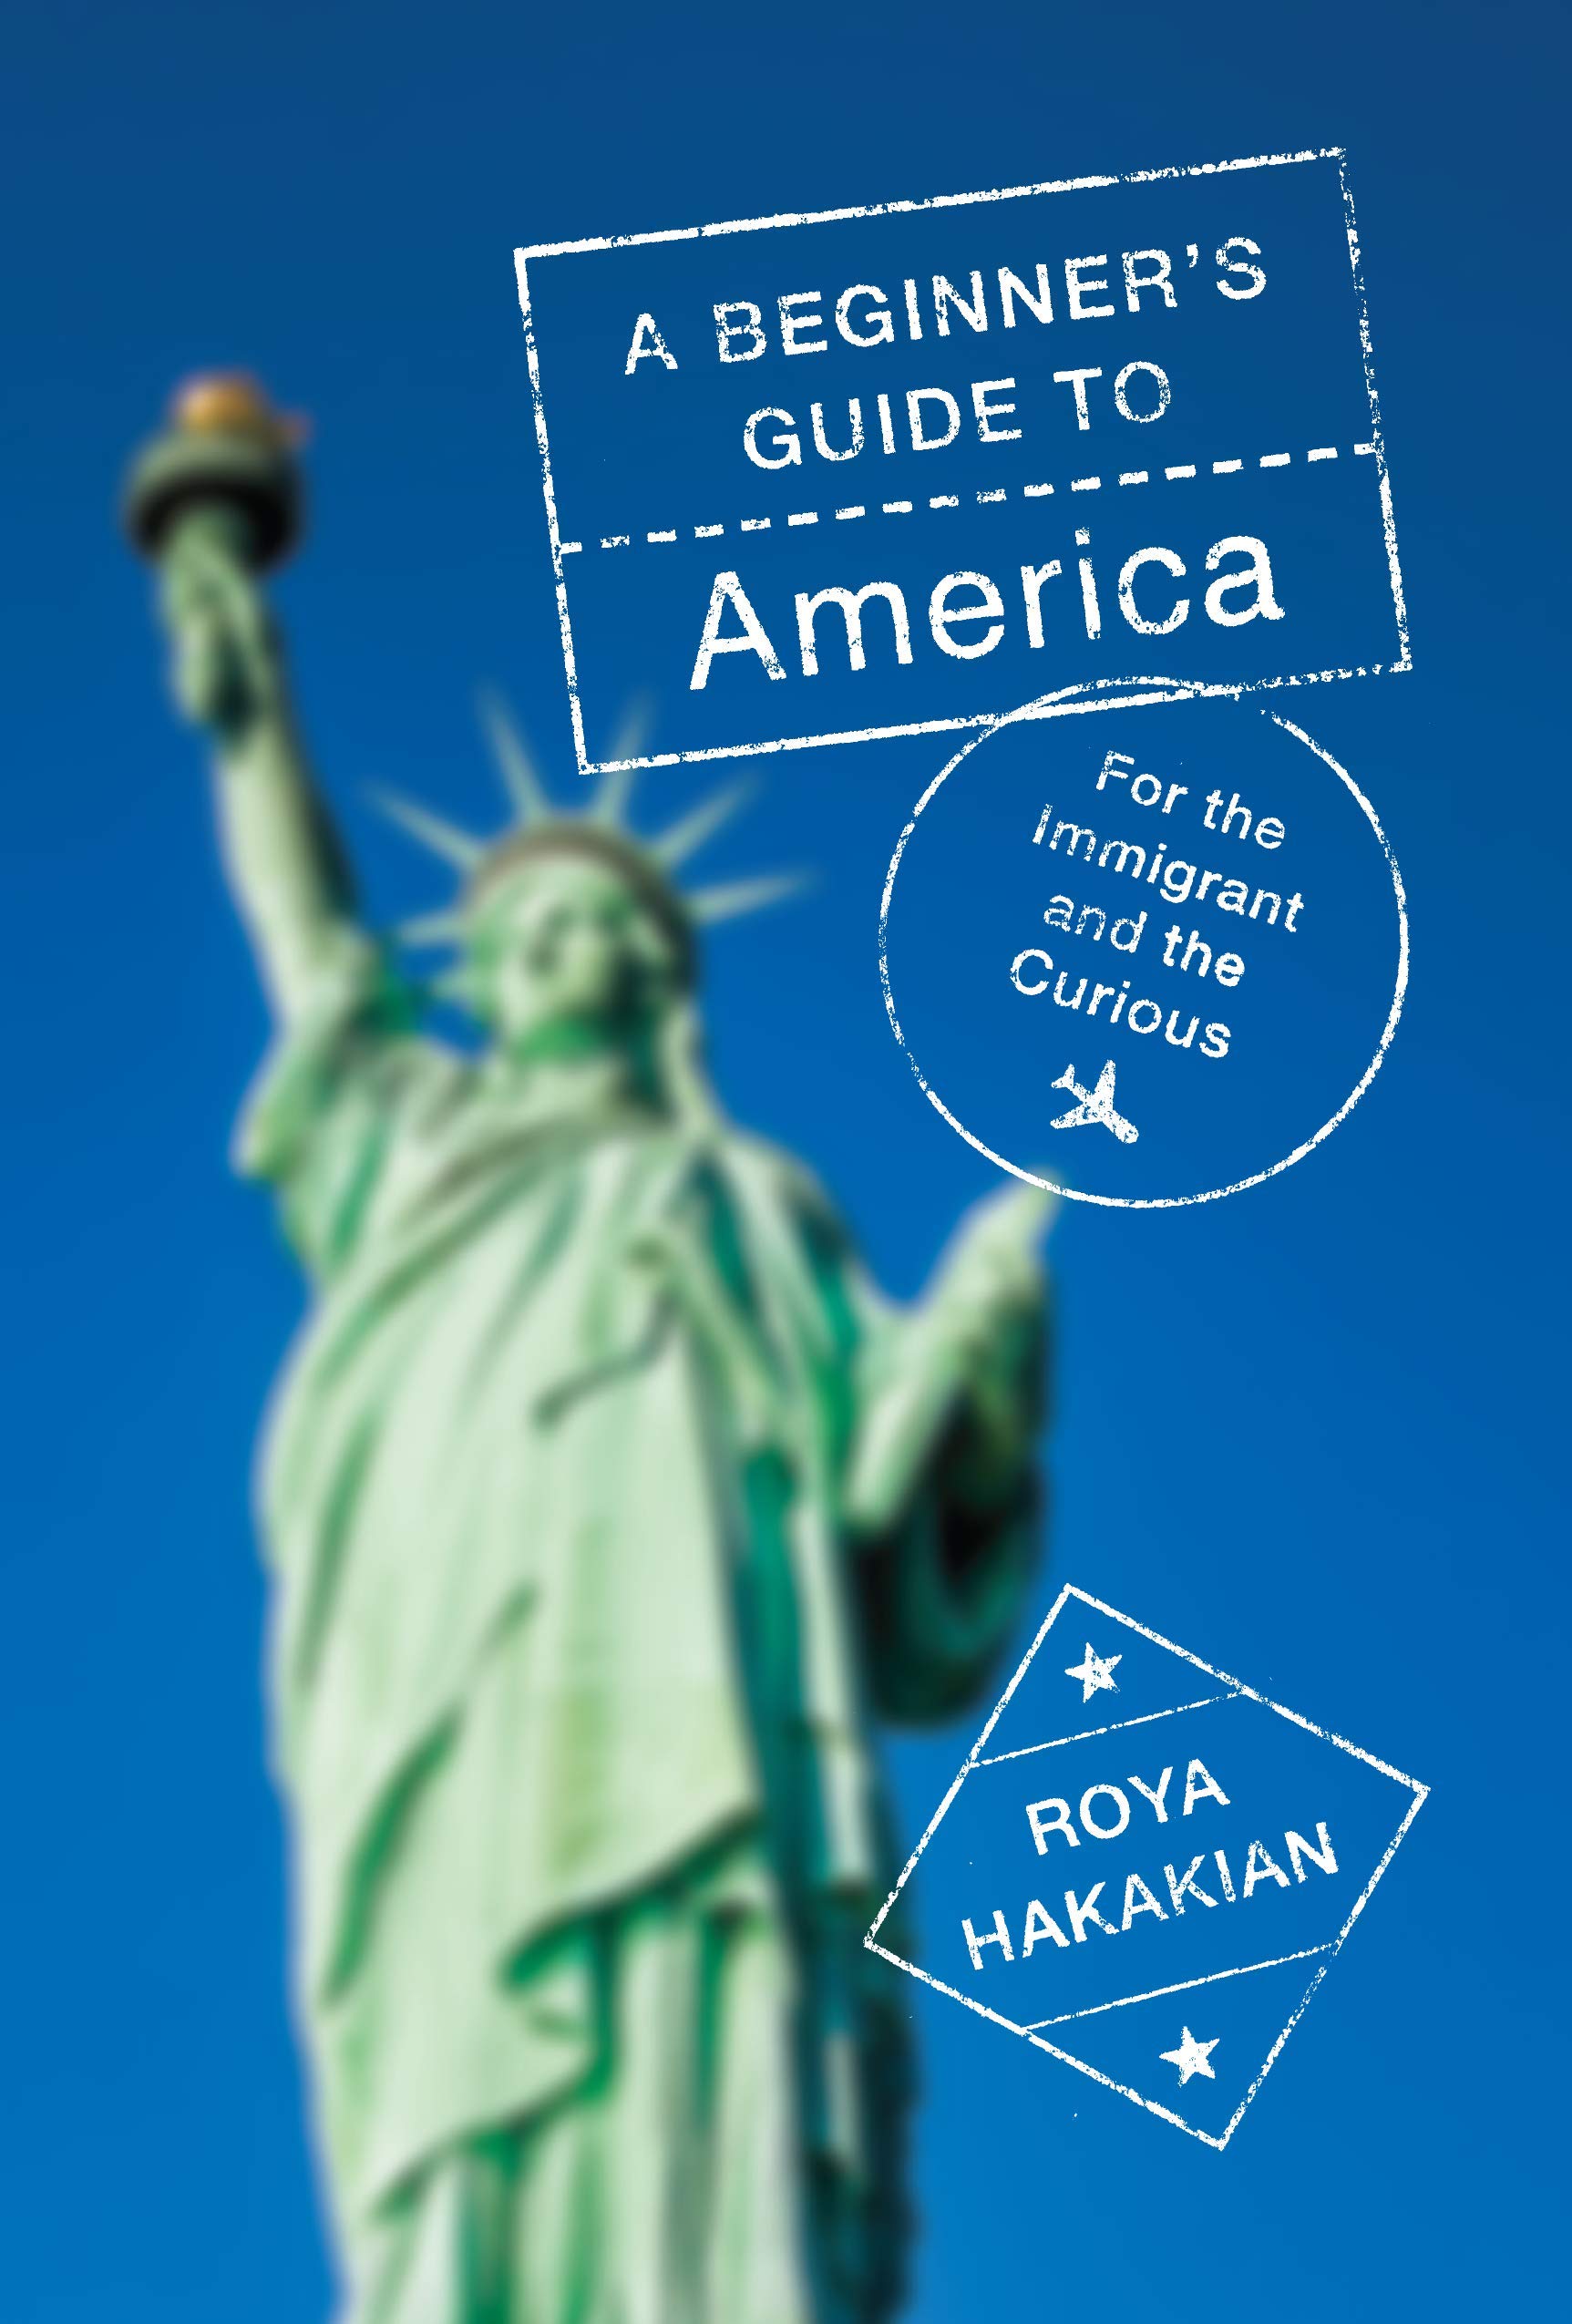 A Beginner’s Guide to America (Part 2) by Roya Hakakian